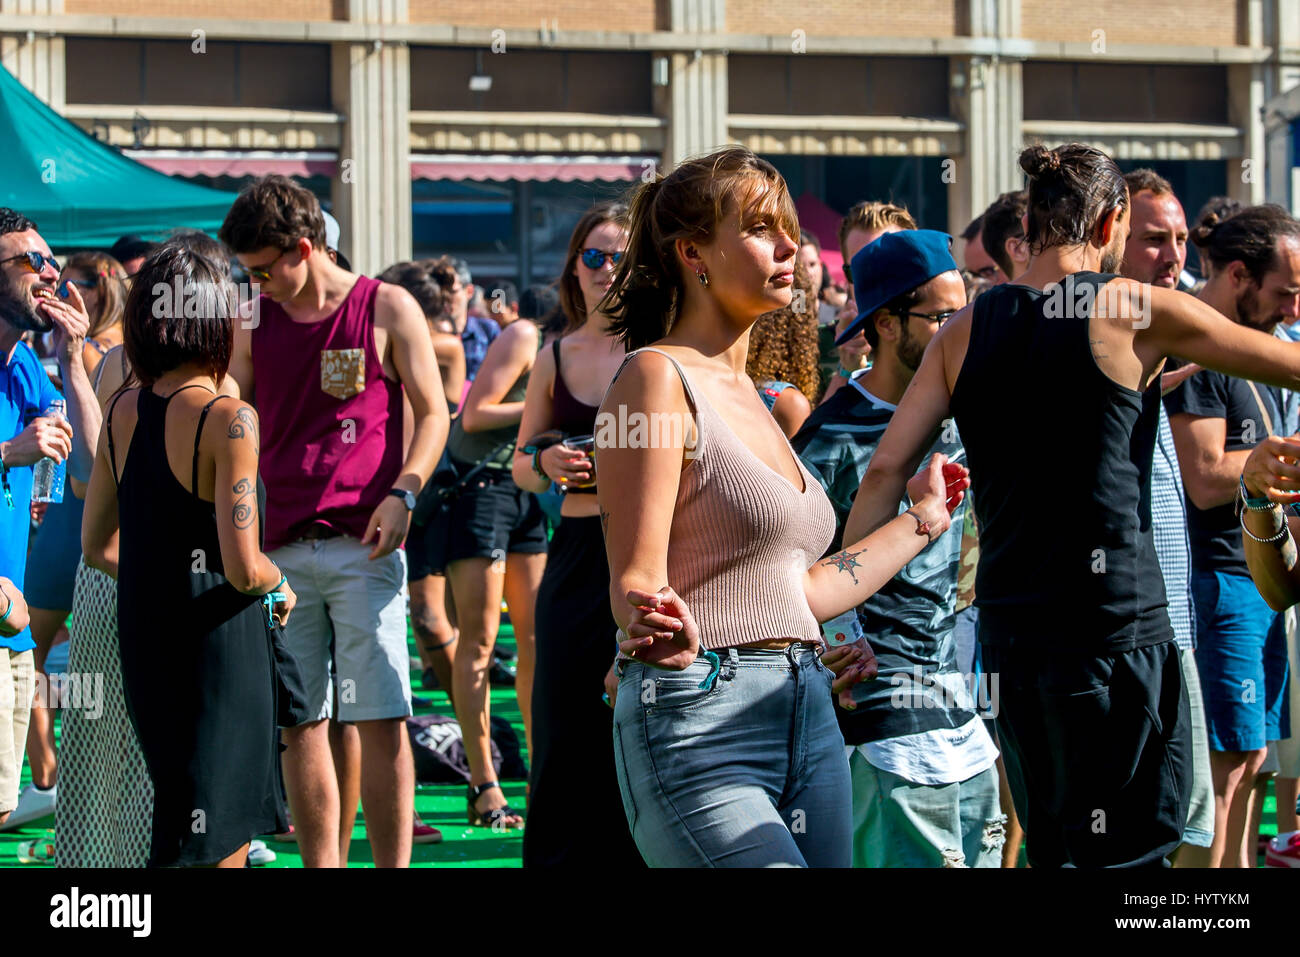 BARCELONA - JUN 16: People dance in a concert at Sonar Festival on June 16, 2016 in Barcelona, Spain. Stock Photo